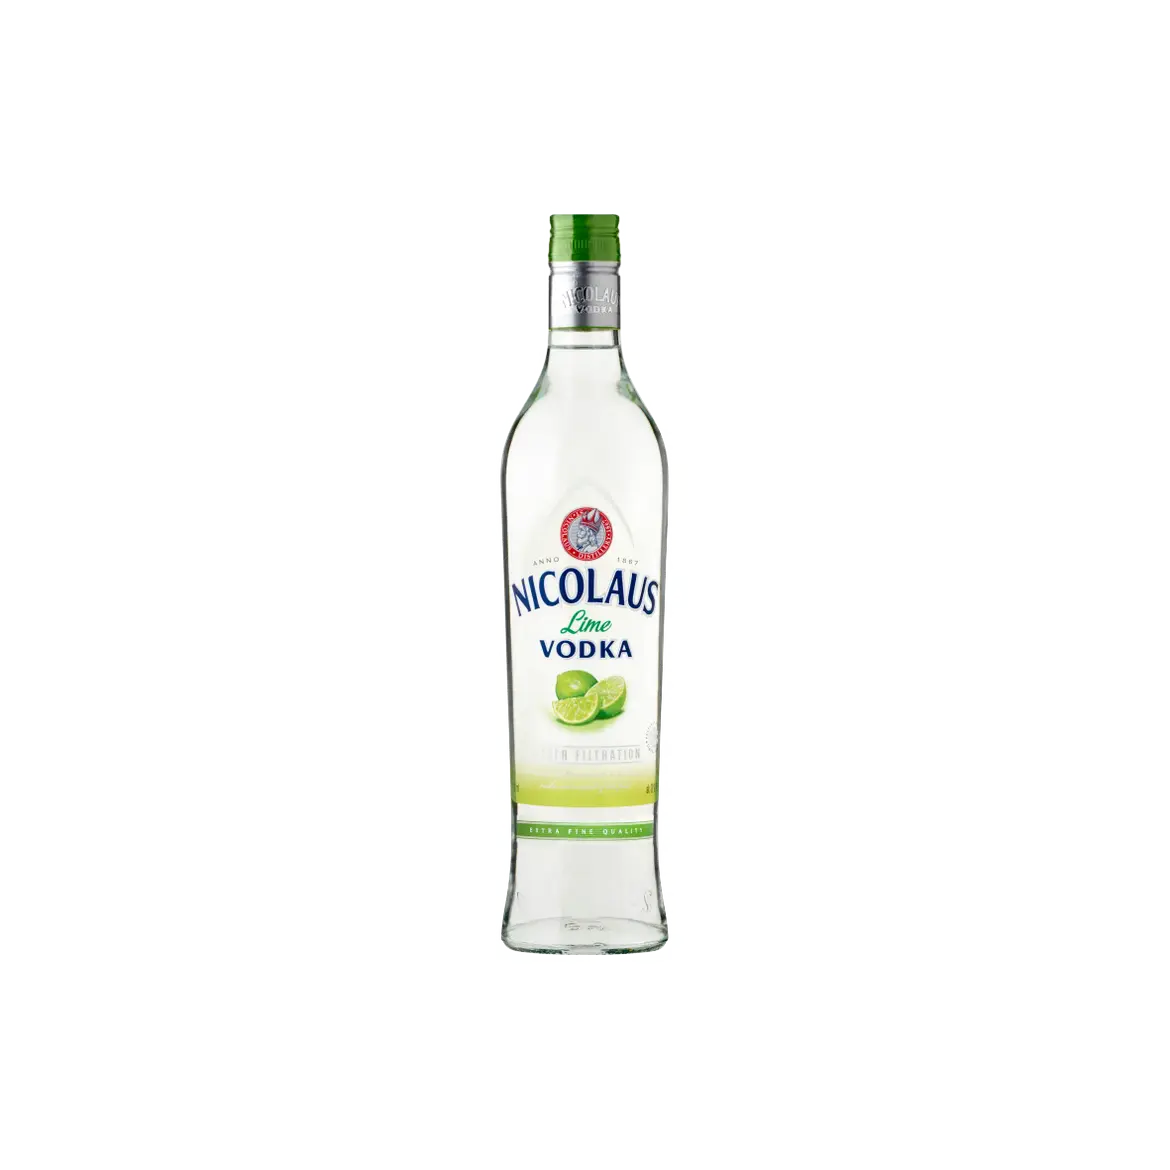 Nicolaus vodka 38% Lime + pohár